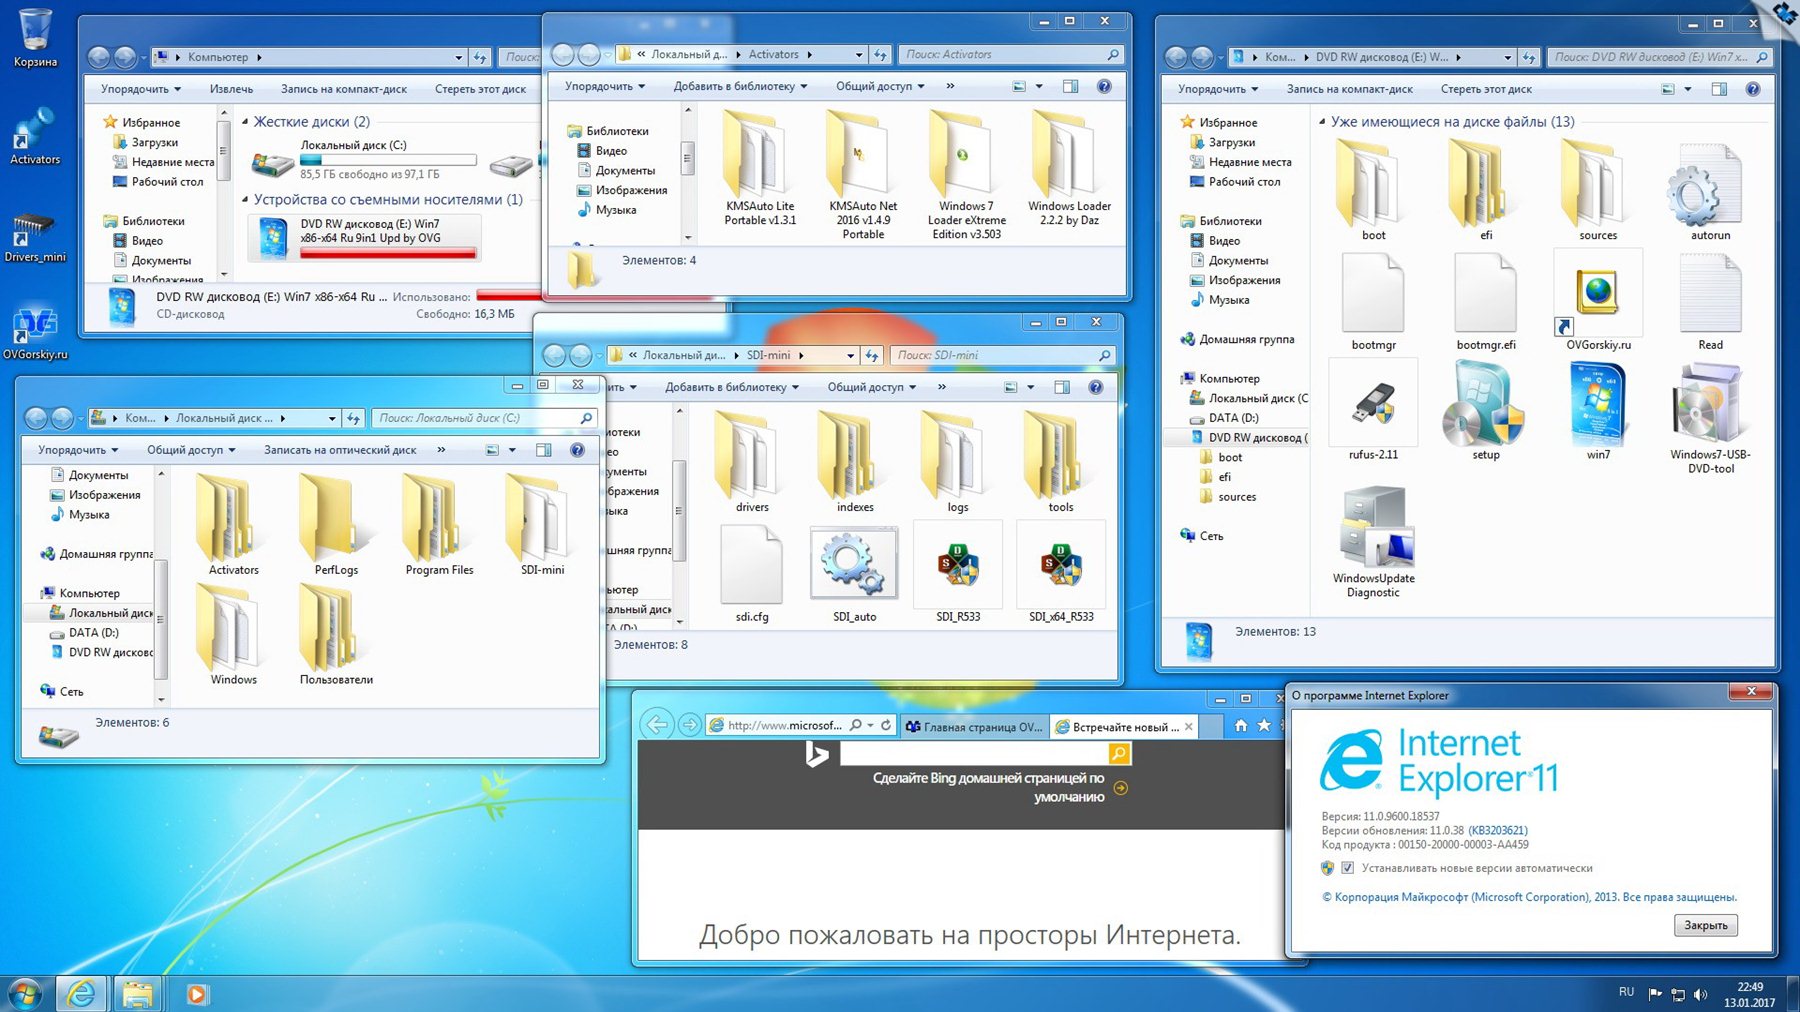 Microsoft Windows 7 sp1 x86/x64 ru 9 in 1 Origin-Upd by OVGORSKIY® 1dvd